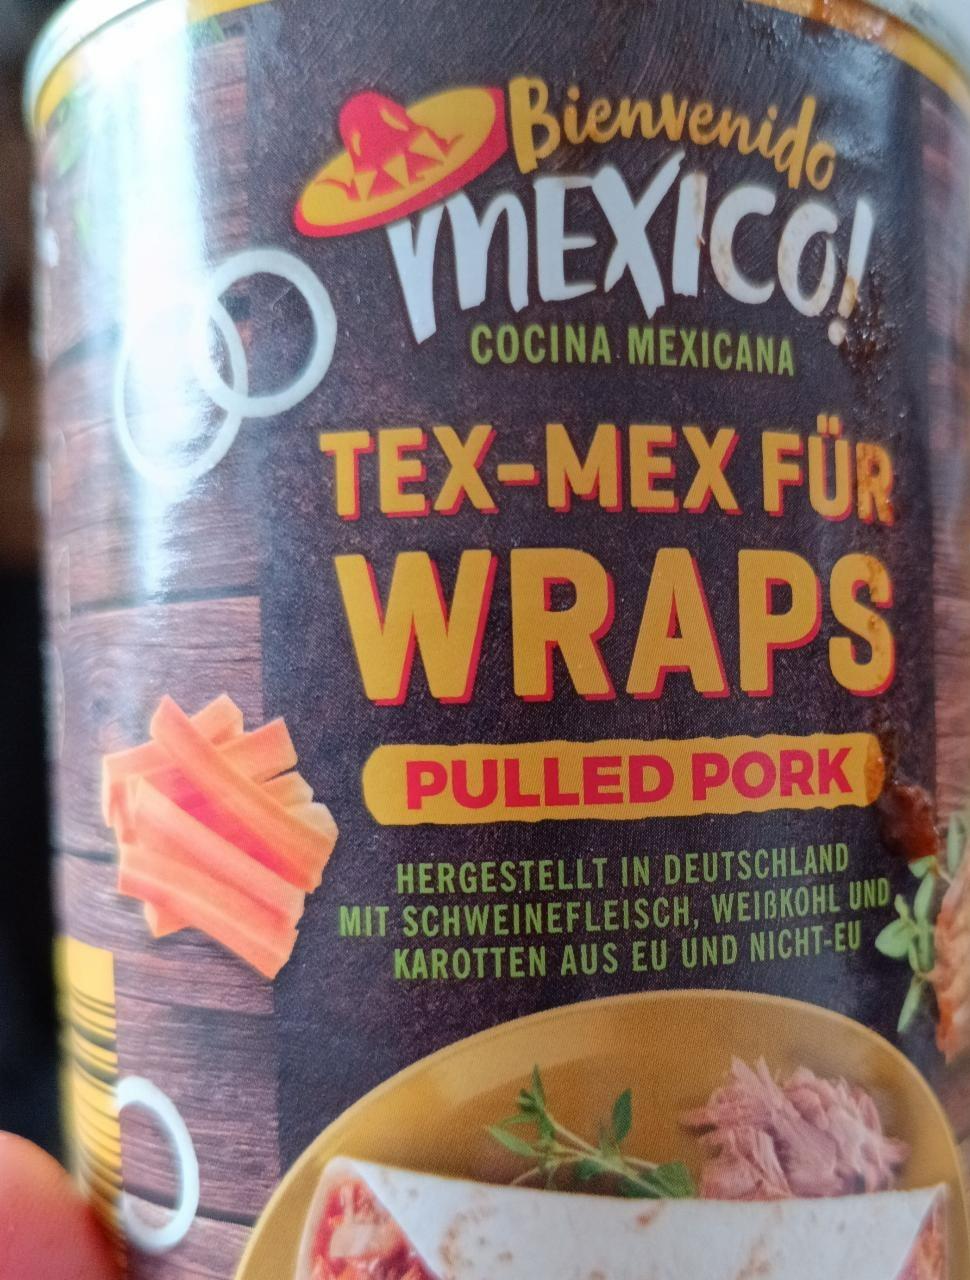 Fotografie - Tex-Mex Für Wraps pulled pork Bienvenido Mexico!